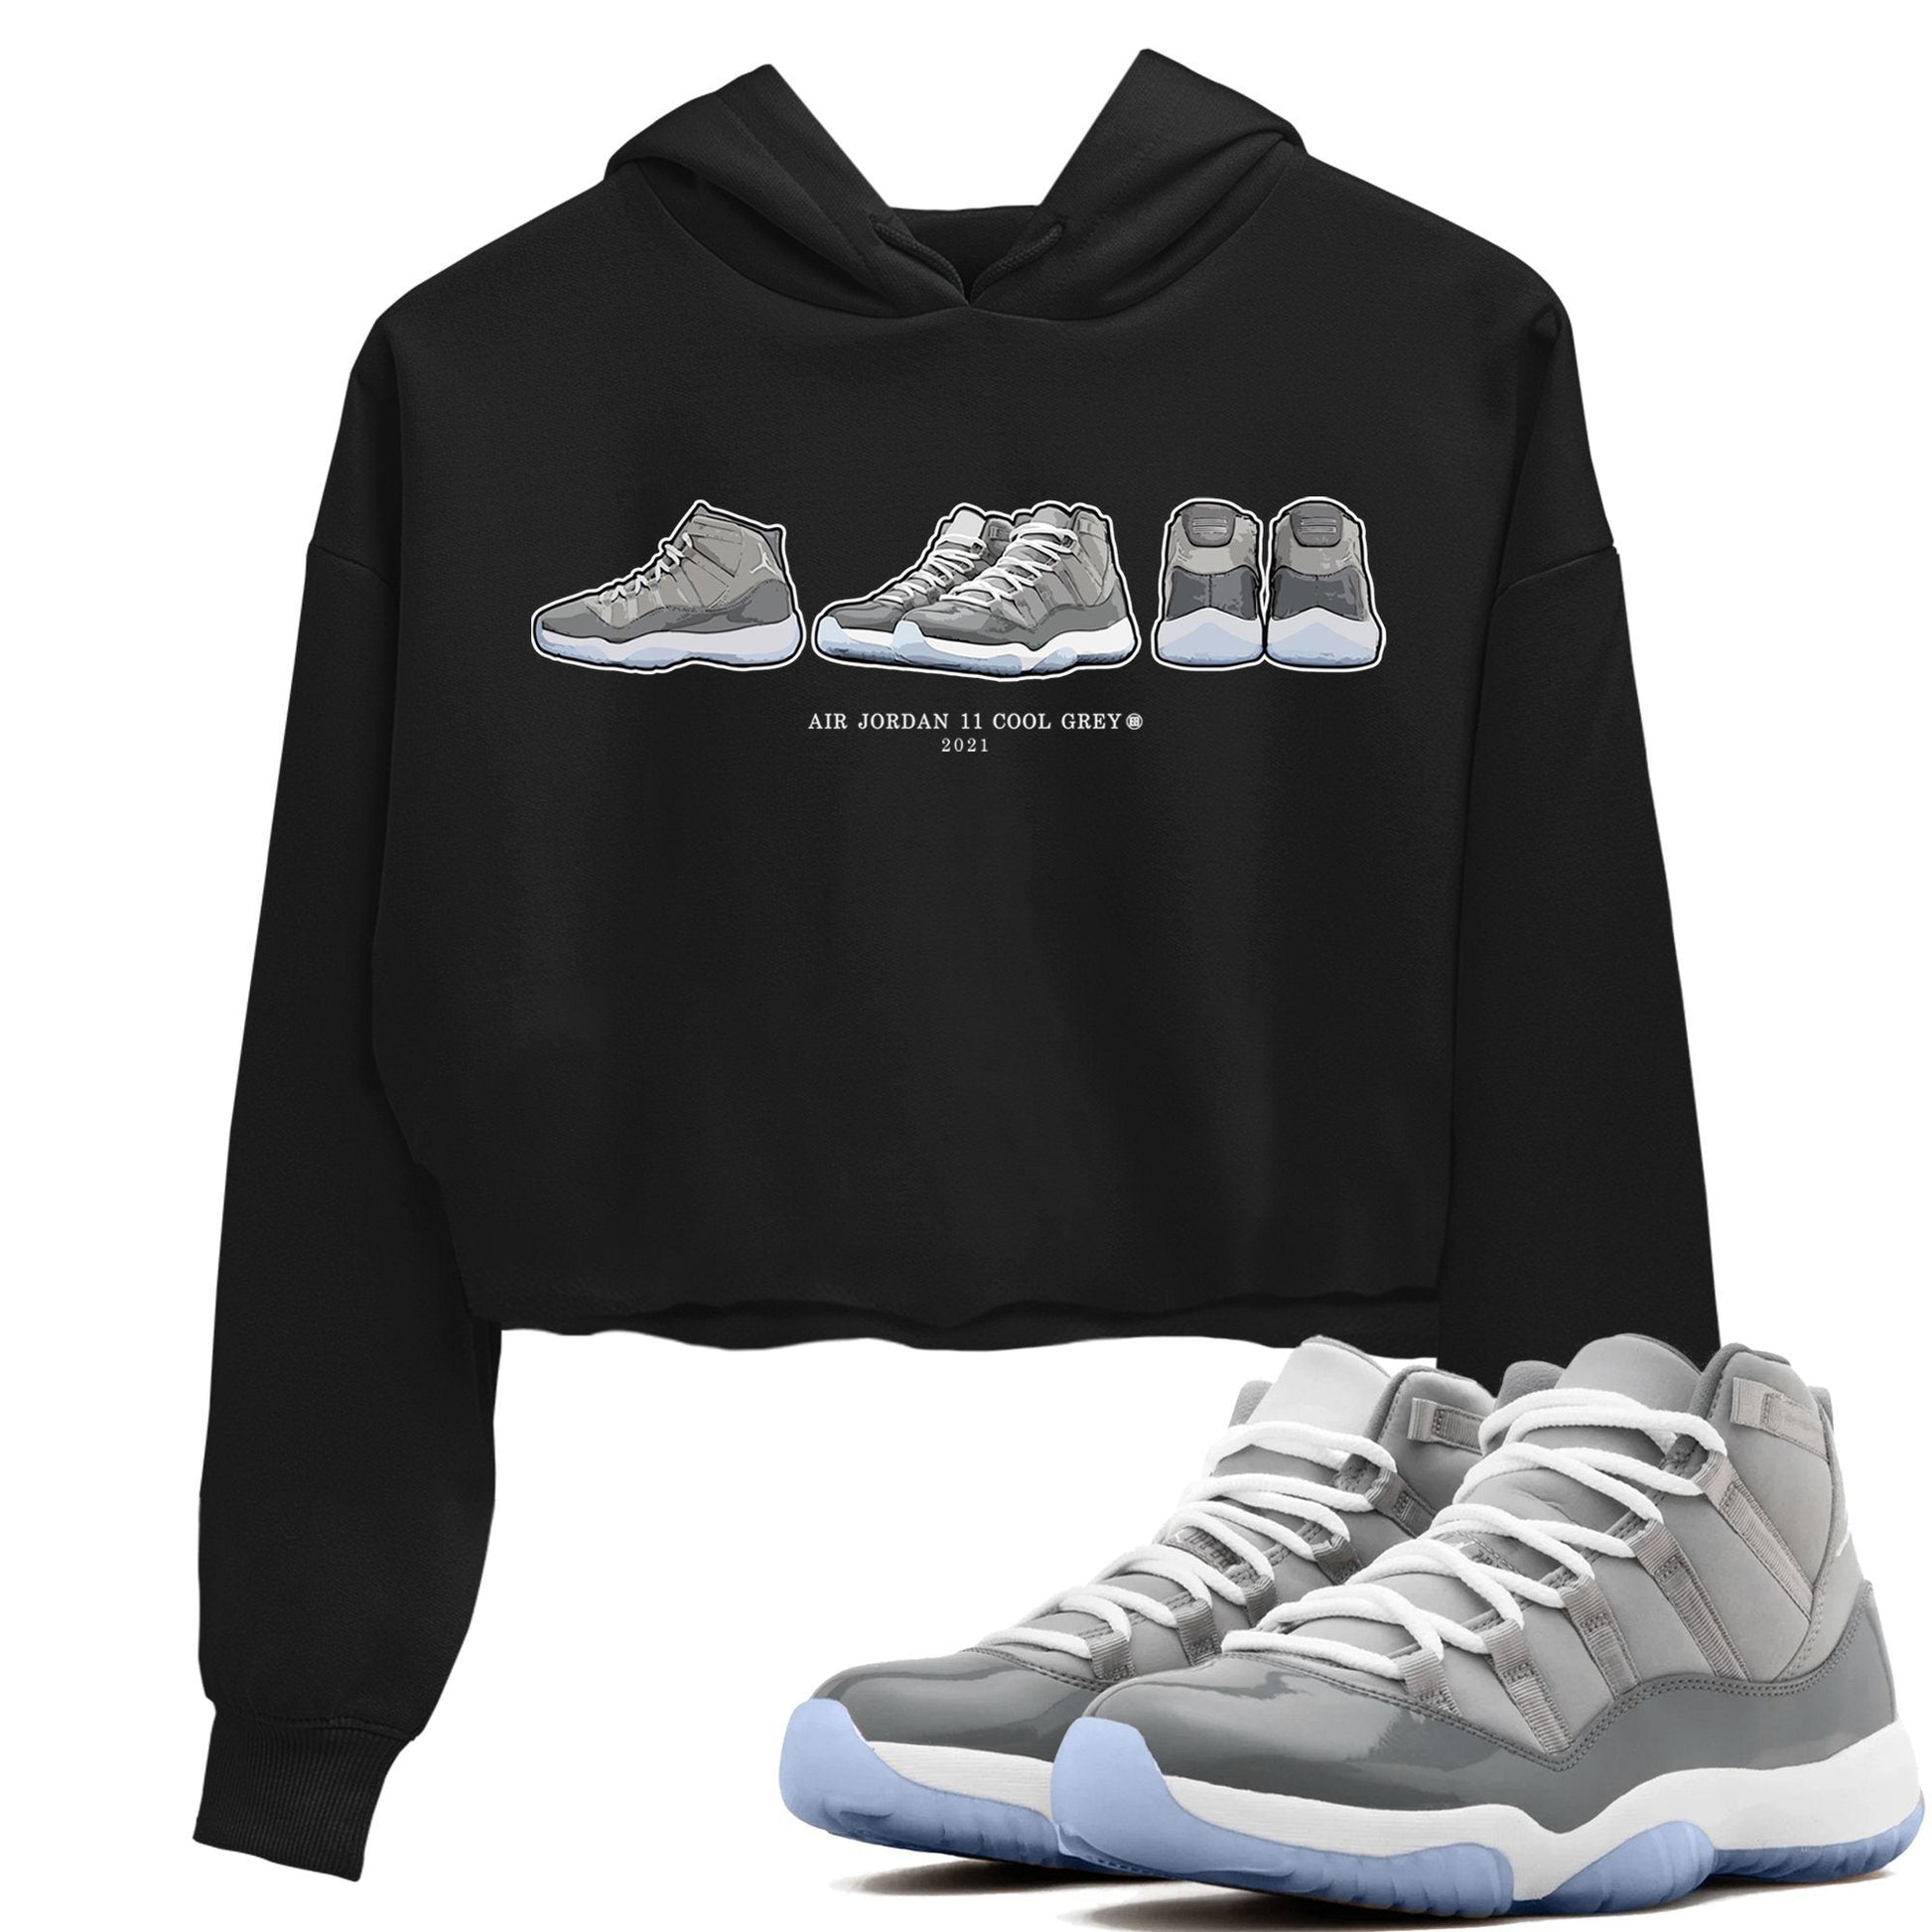 Jordan 11 Cool Grey Sneaker Match Tees Air Jordan 11 Prelude Sneaker Tees Jordan 11 Cool Grey Sneaker Release Tees Women's Shirts